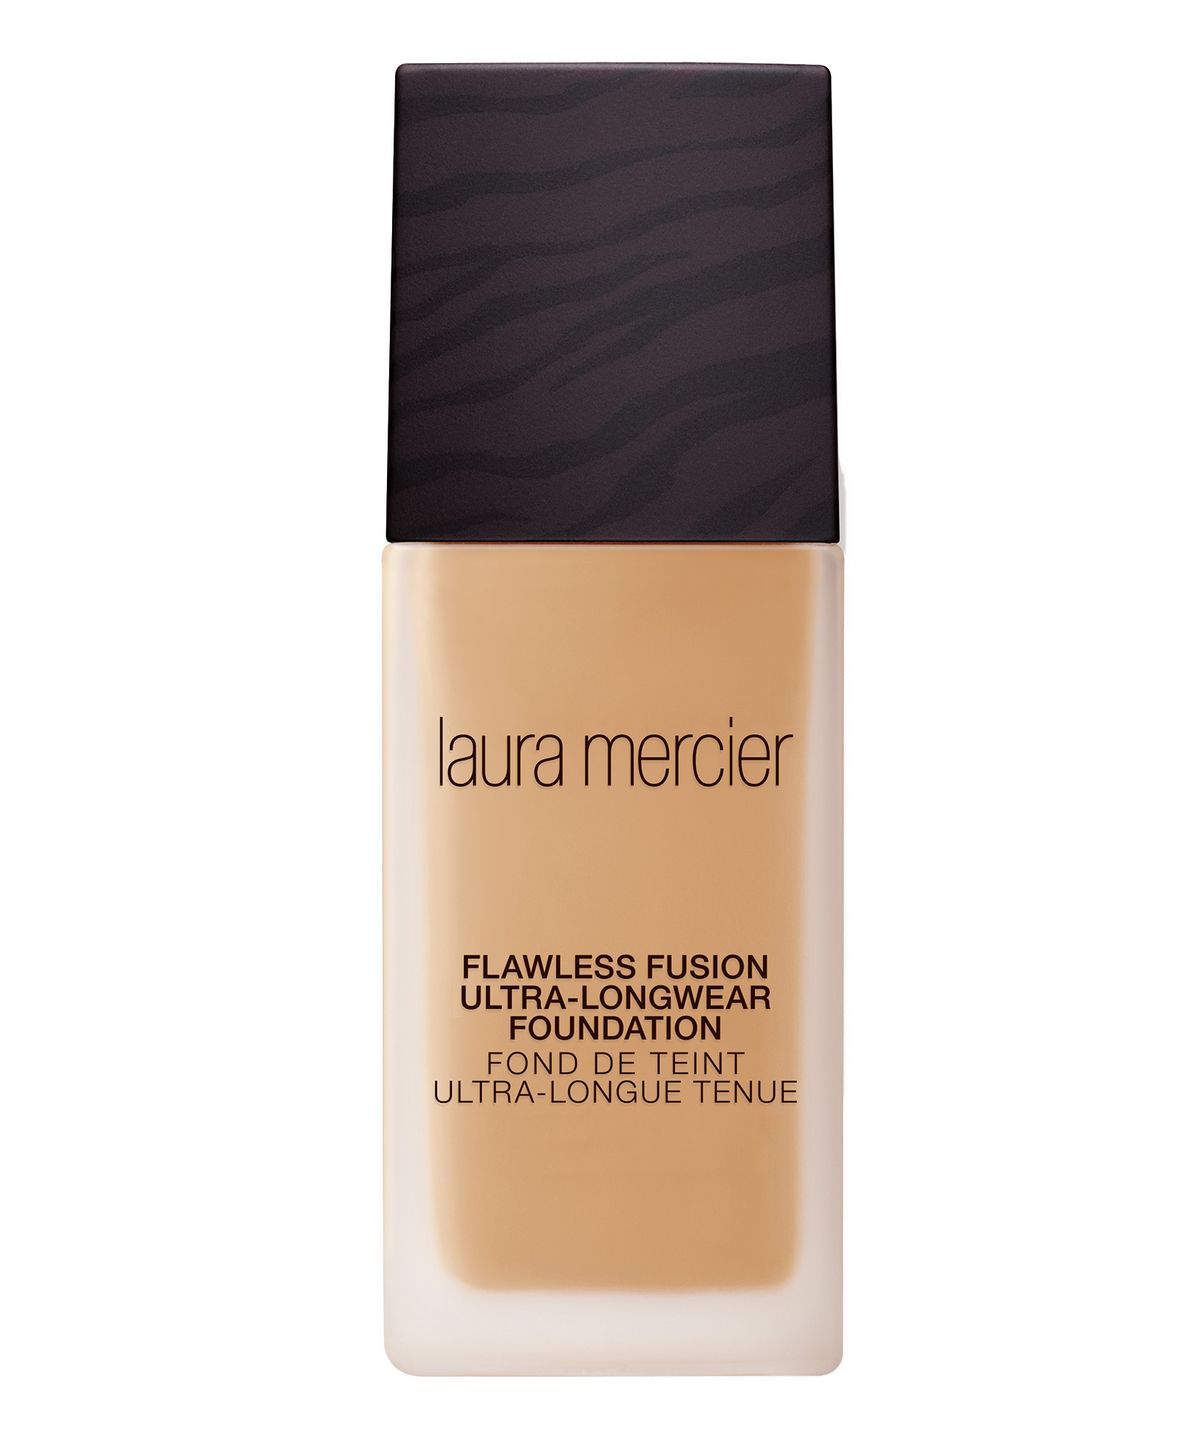 Laura Mercier - Flawless Fusion Ultra-Longwear Foundation - Dune